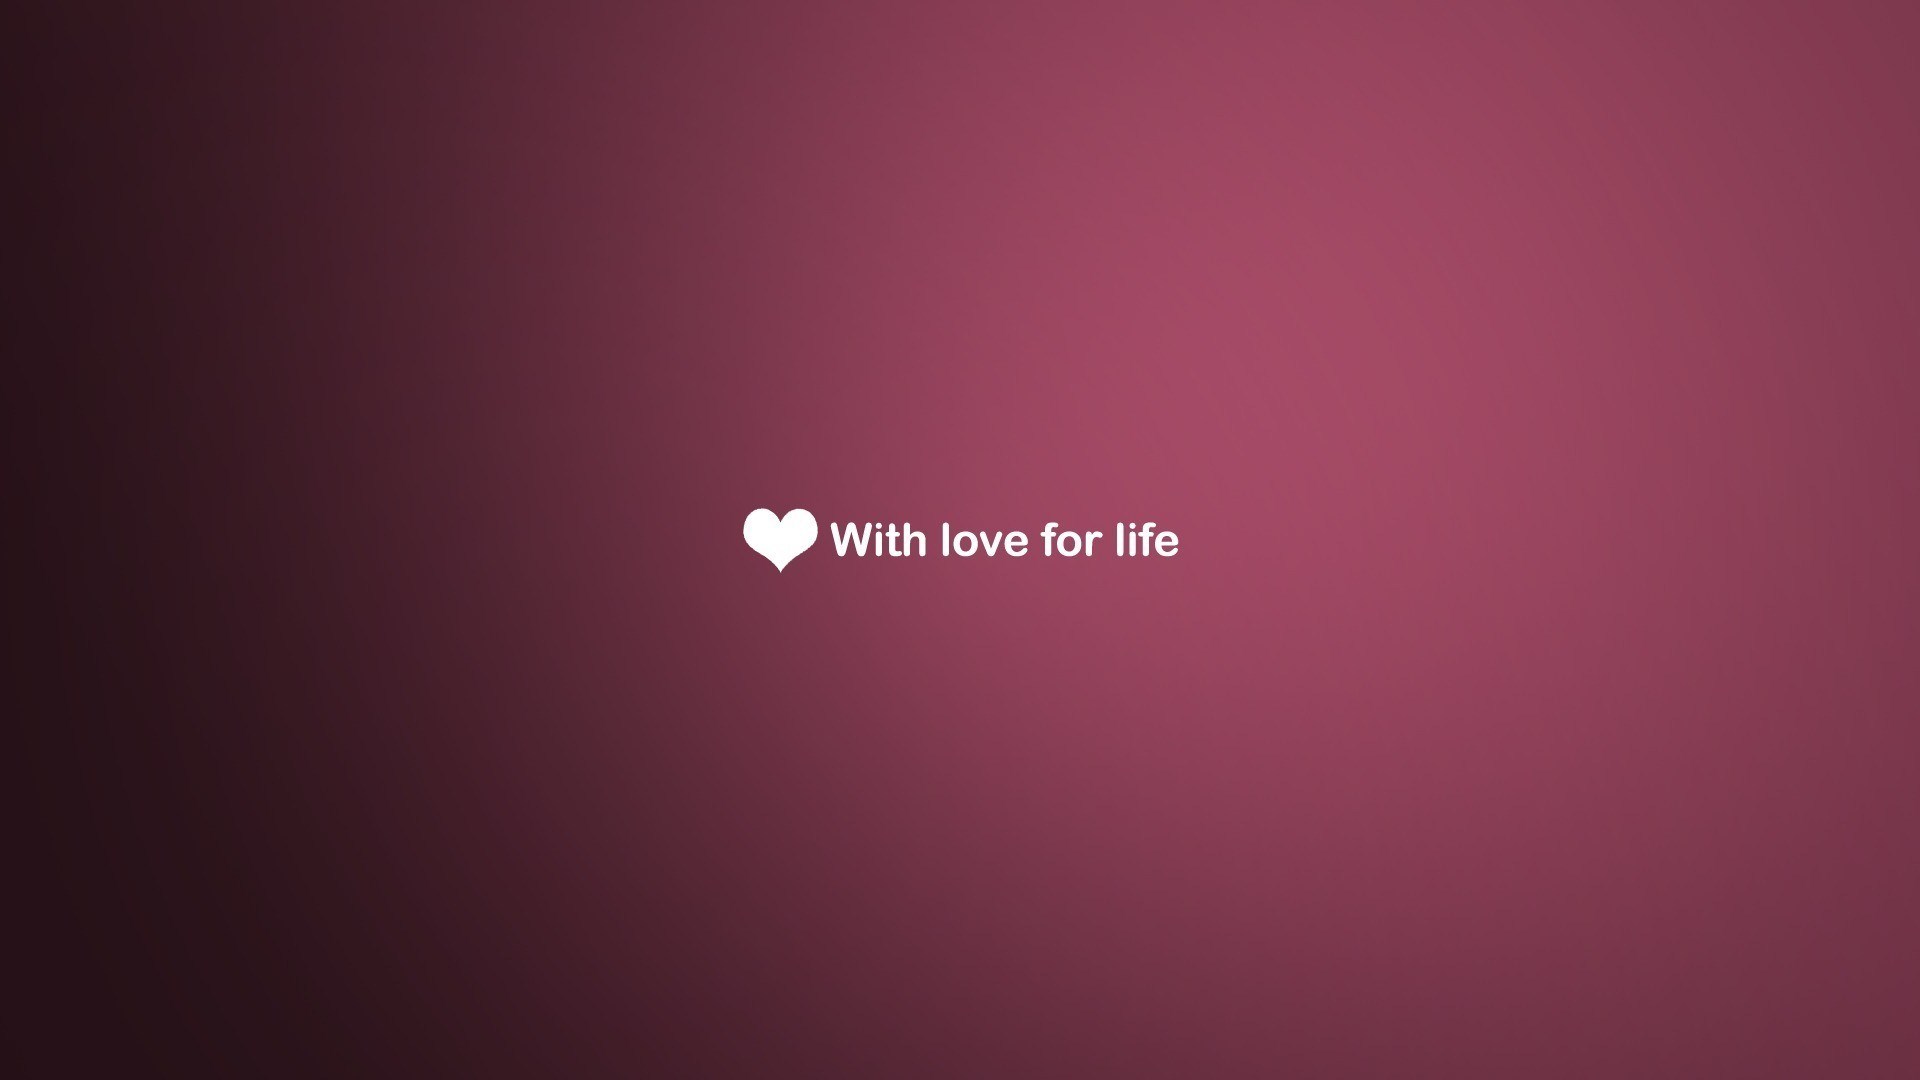 Love Life - Wallpaper, High Definition, High Quality, Widescreen